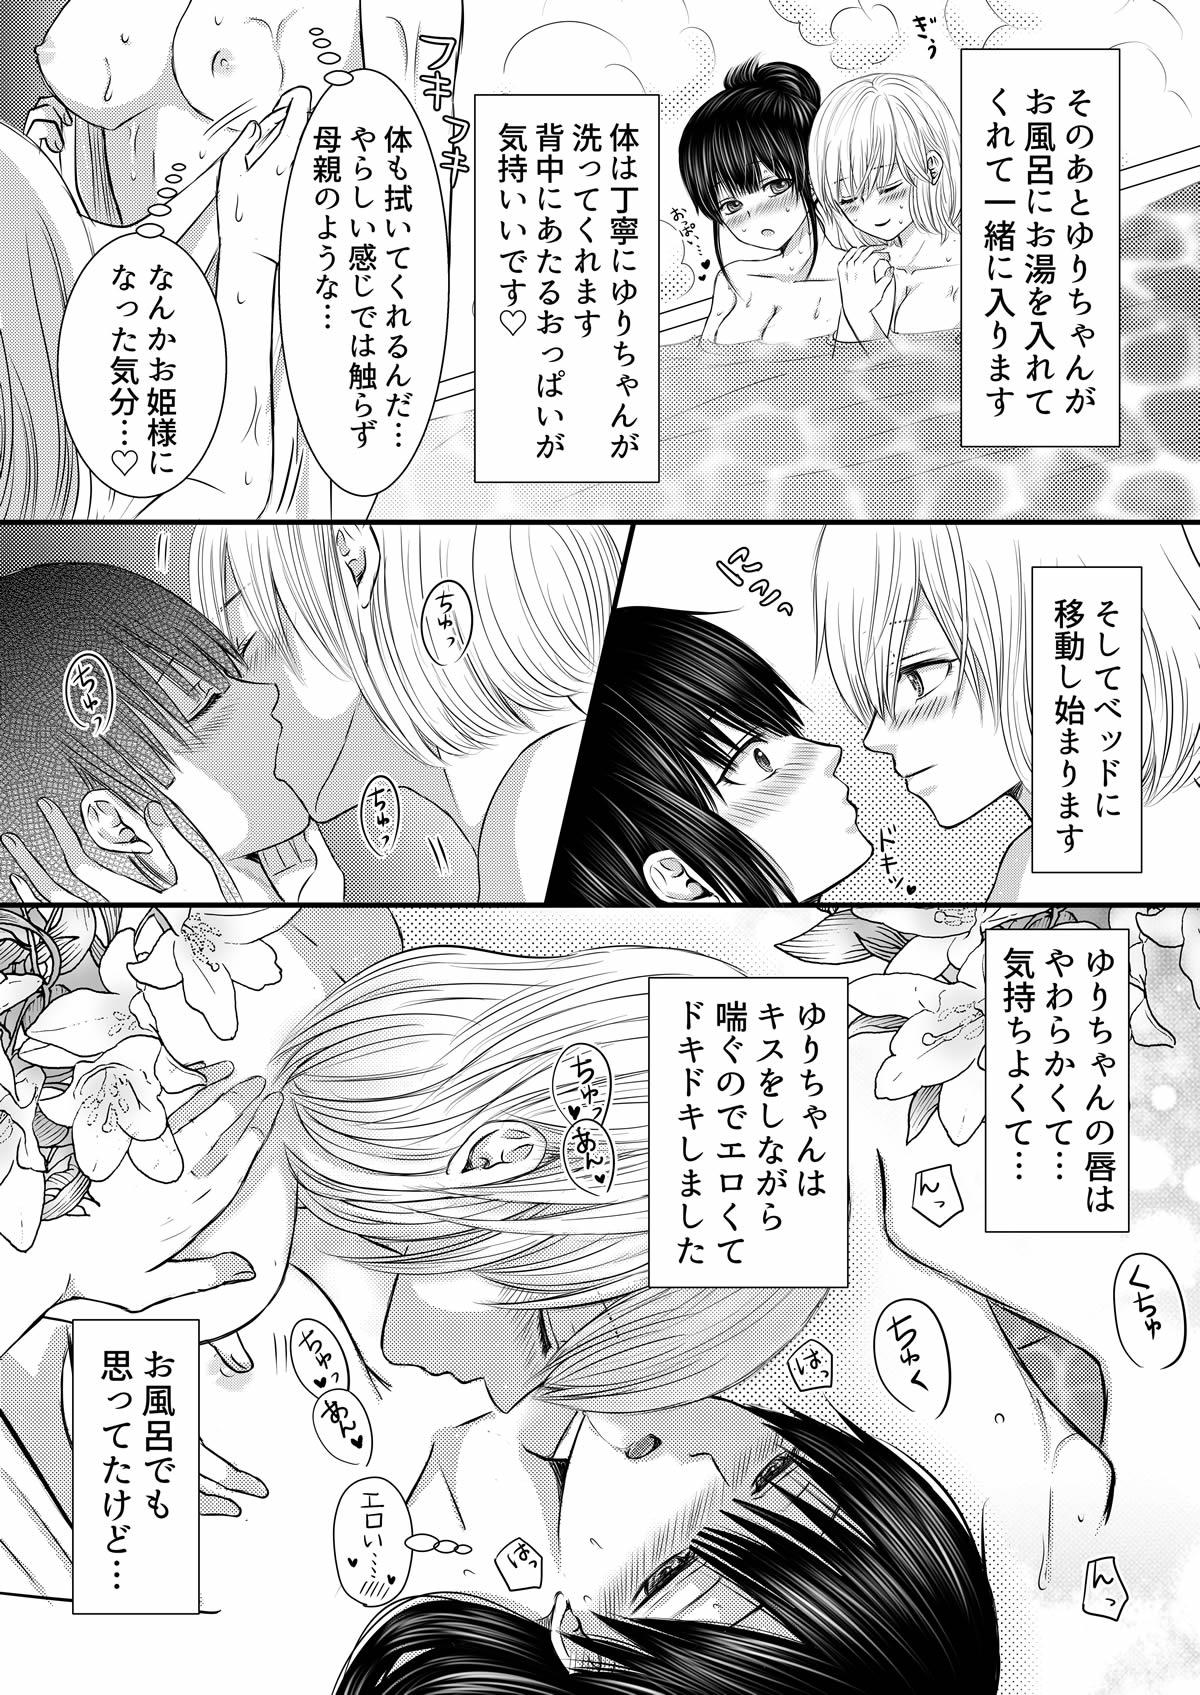 Longhair Onna 3-ri de Rezu Fuuzoku de Asonde Mita Repo Gets - Page 2